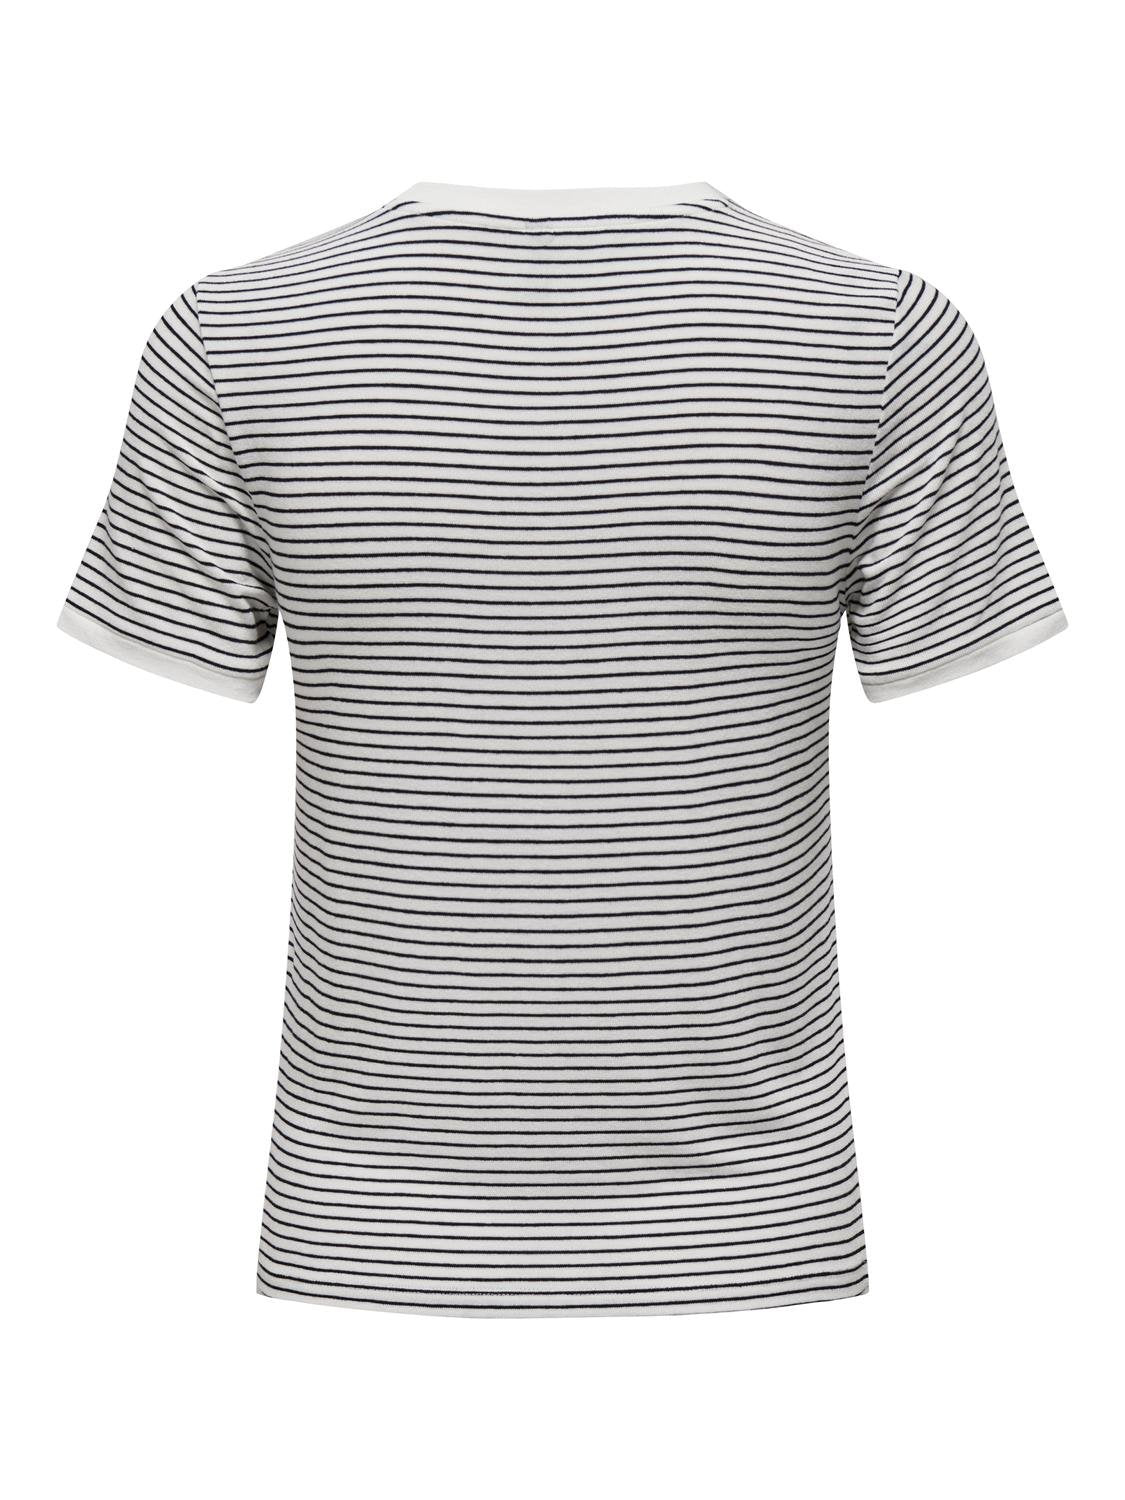 ONLTINE T-Shirt - Stripete